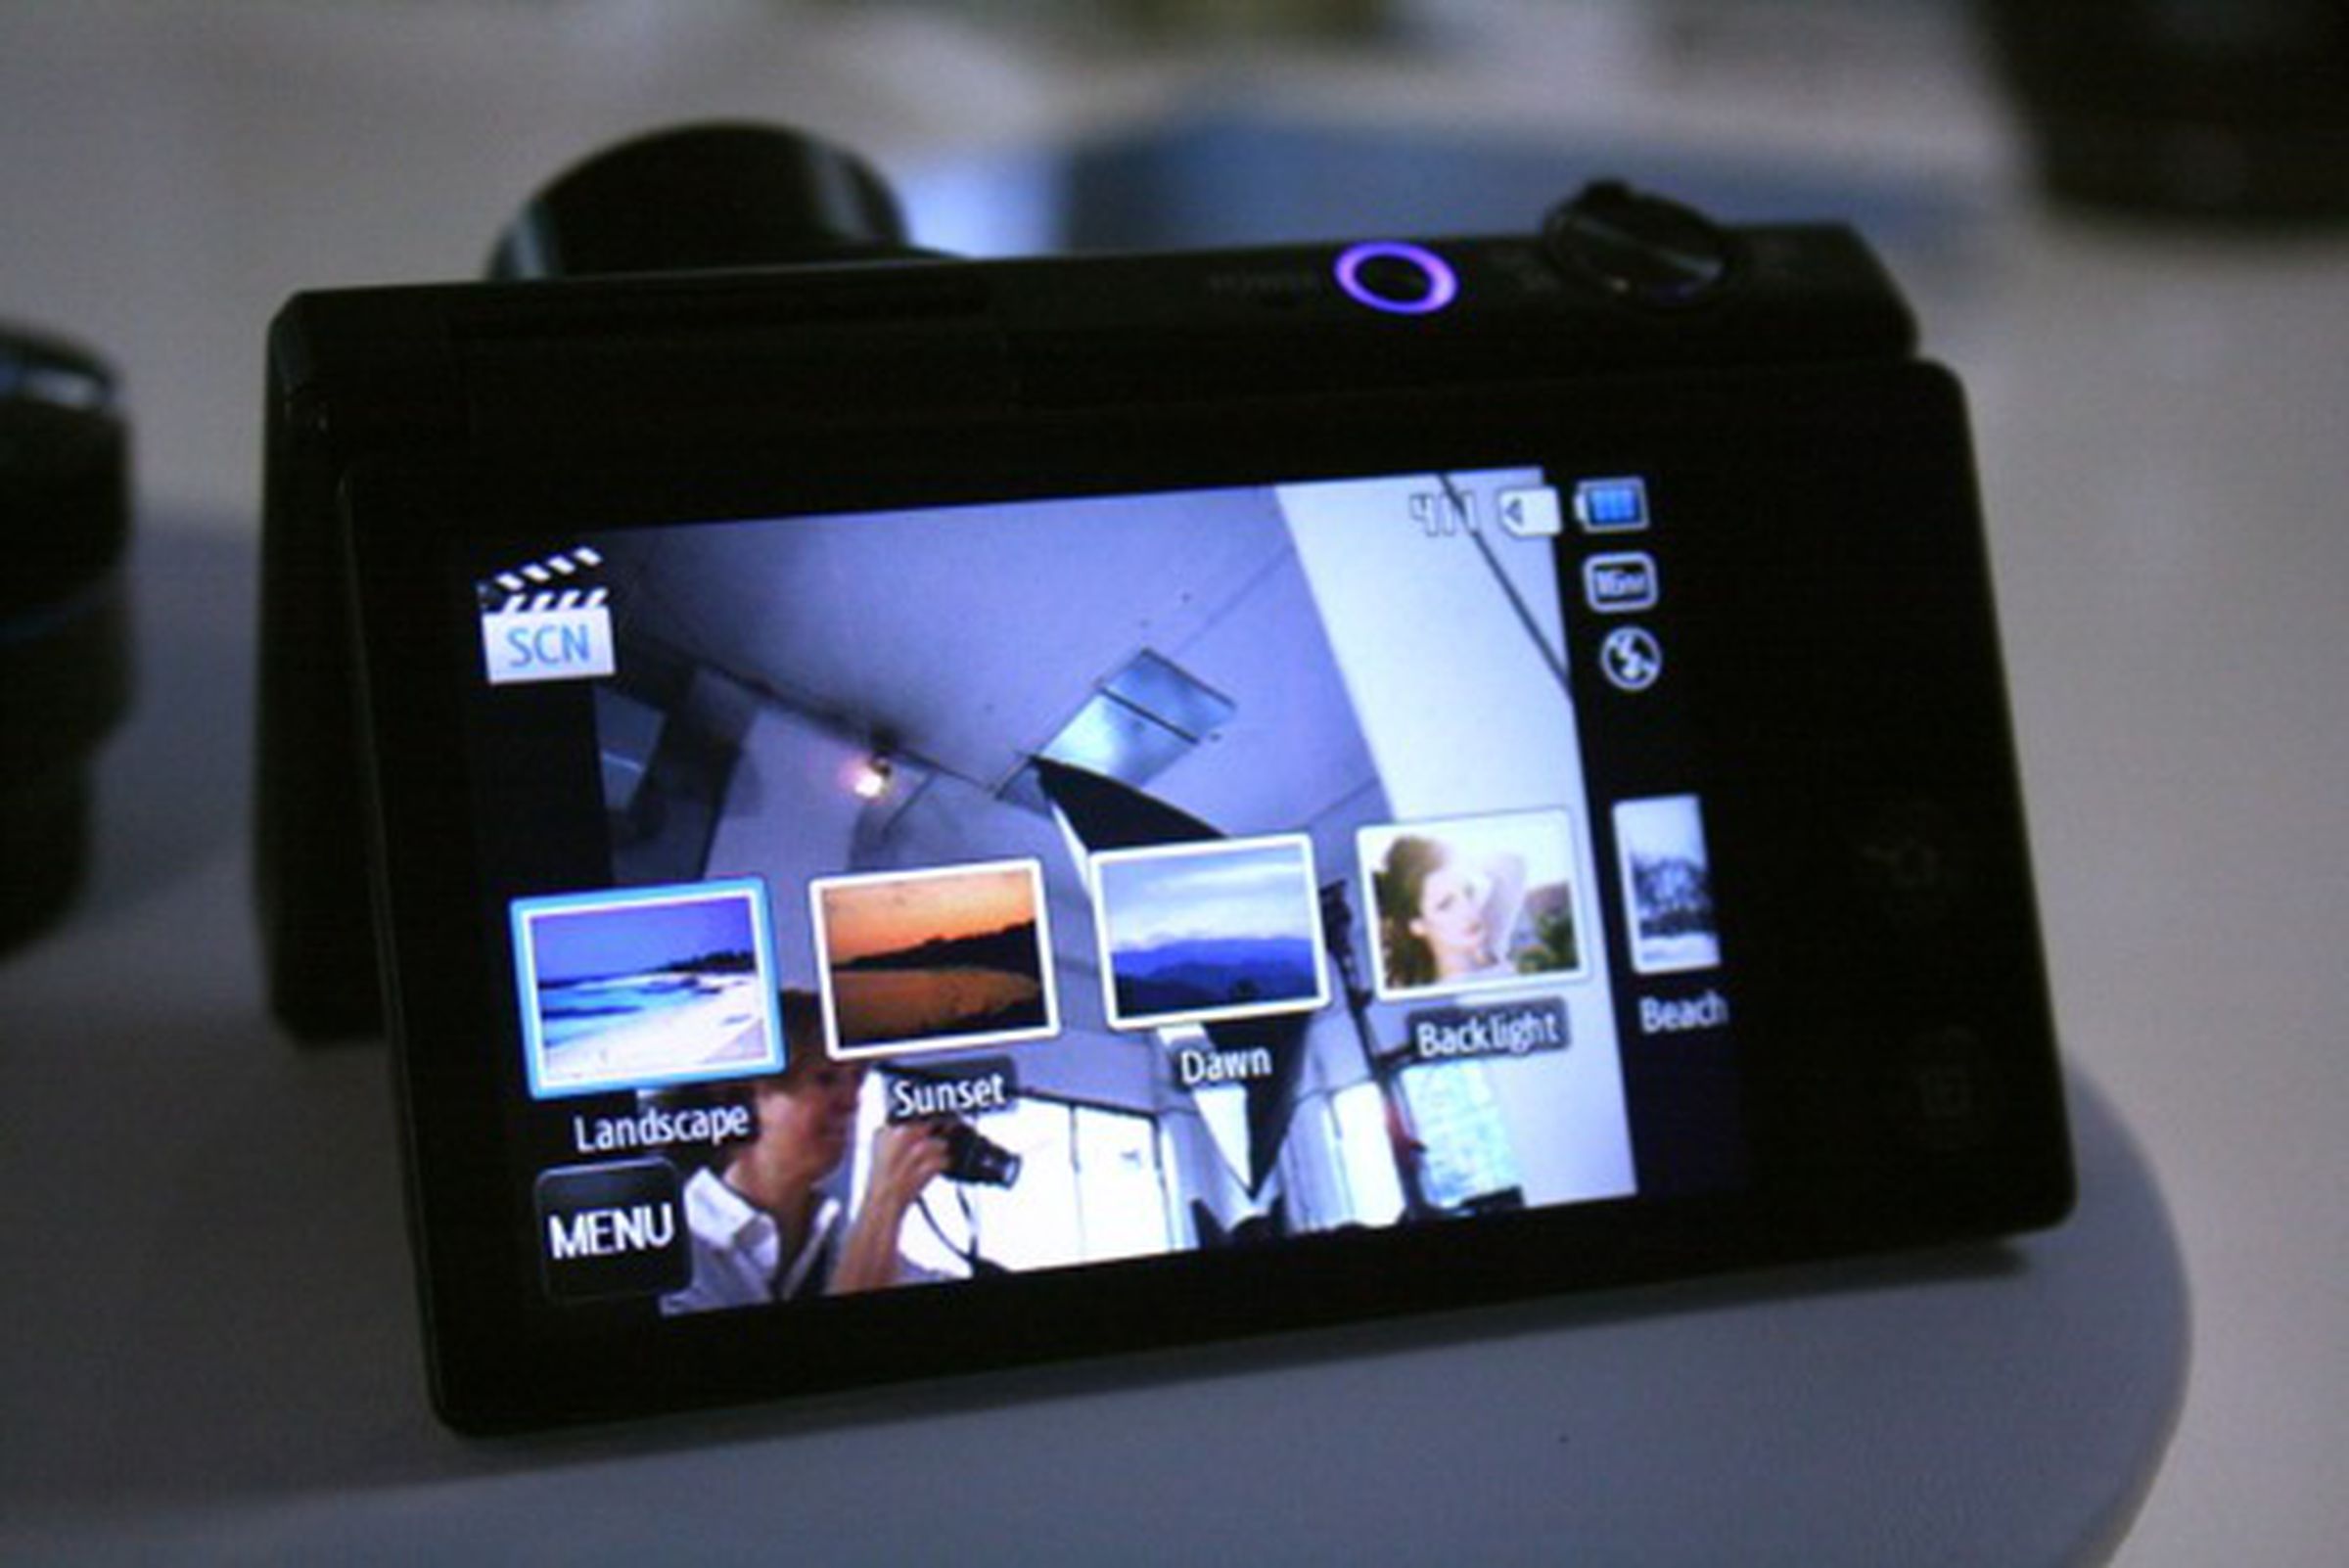 Samsung MV800 hands-on photos